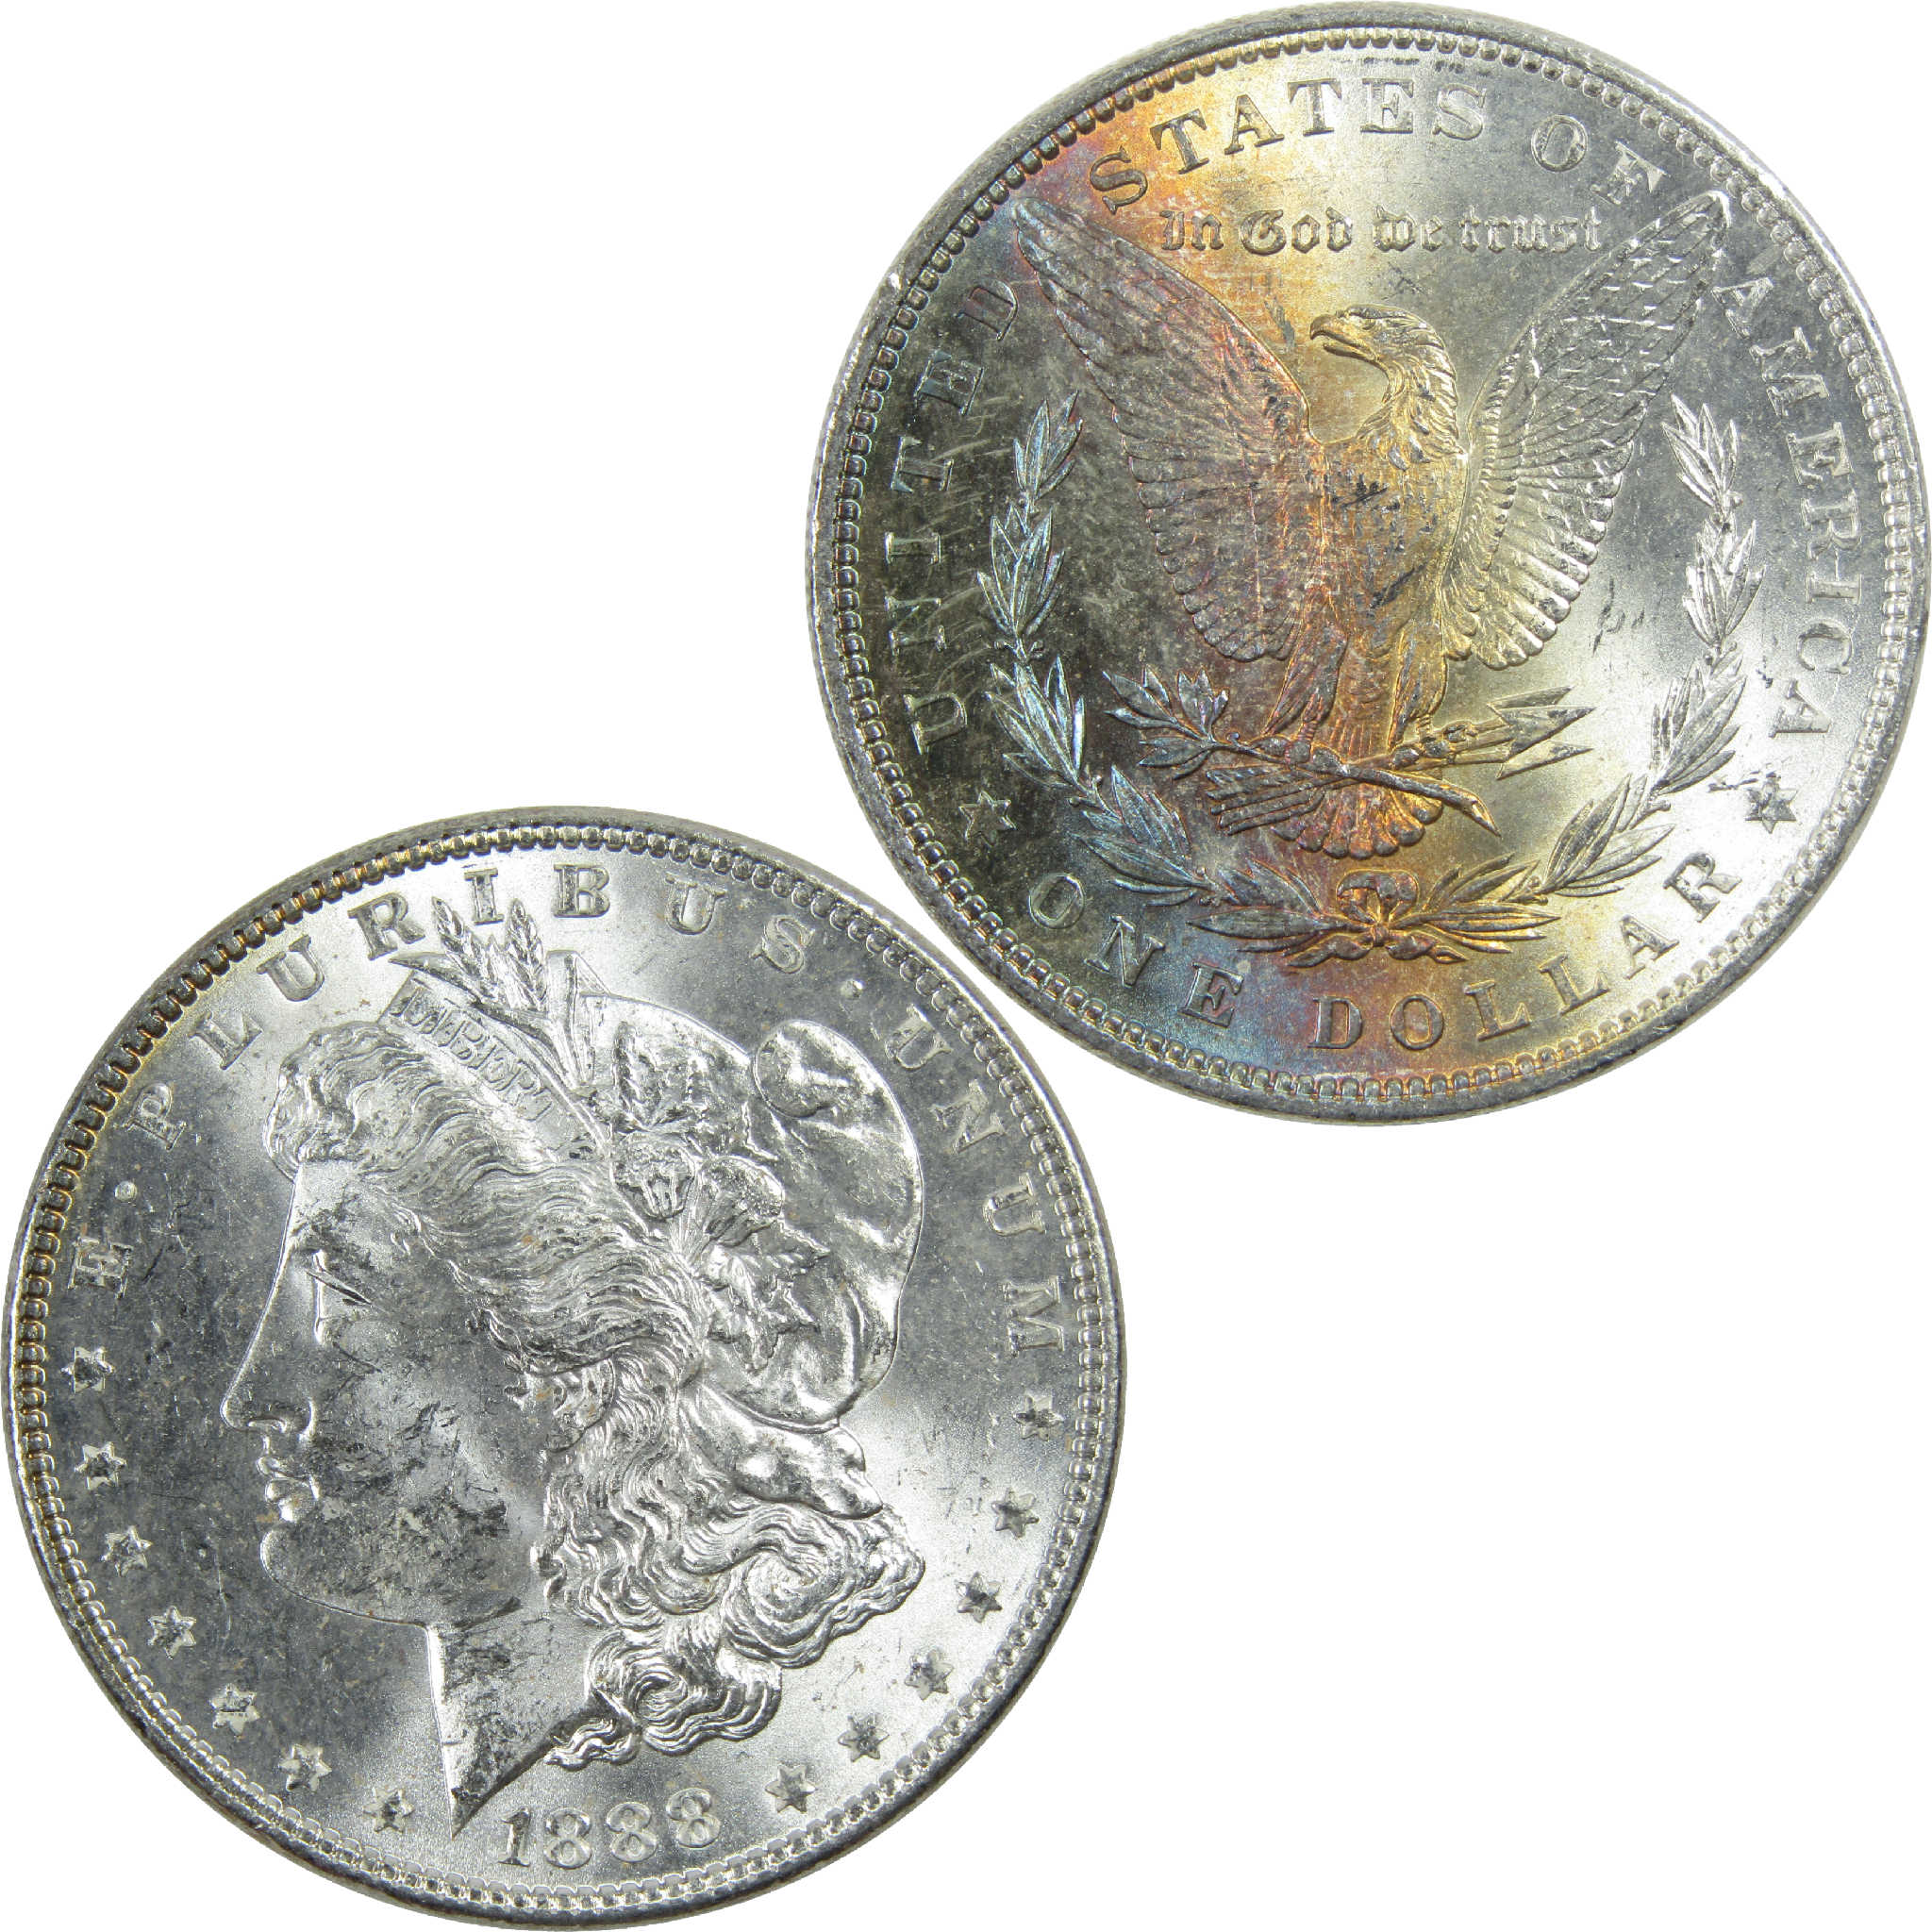 1888 Morgan Dollar Uncirculated Silver $1 Coin Toned SKU:I13204